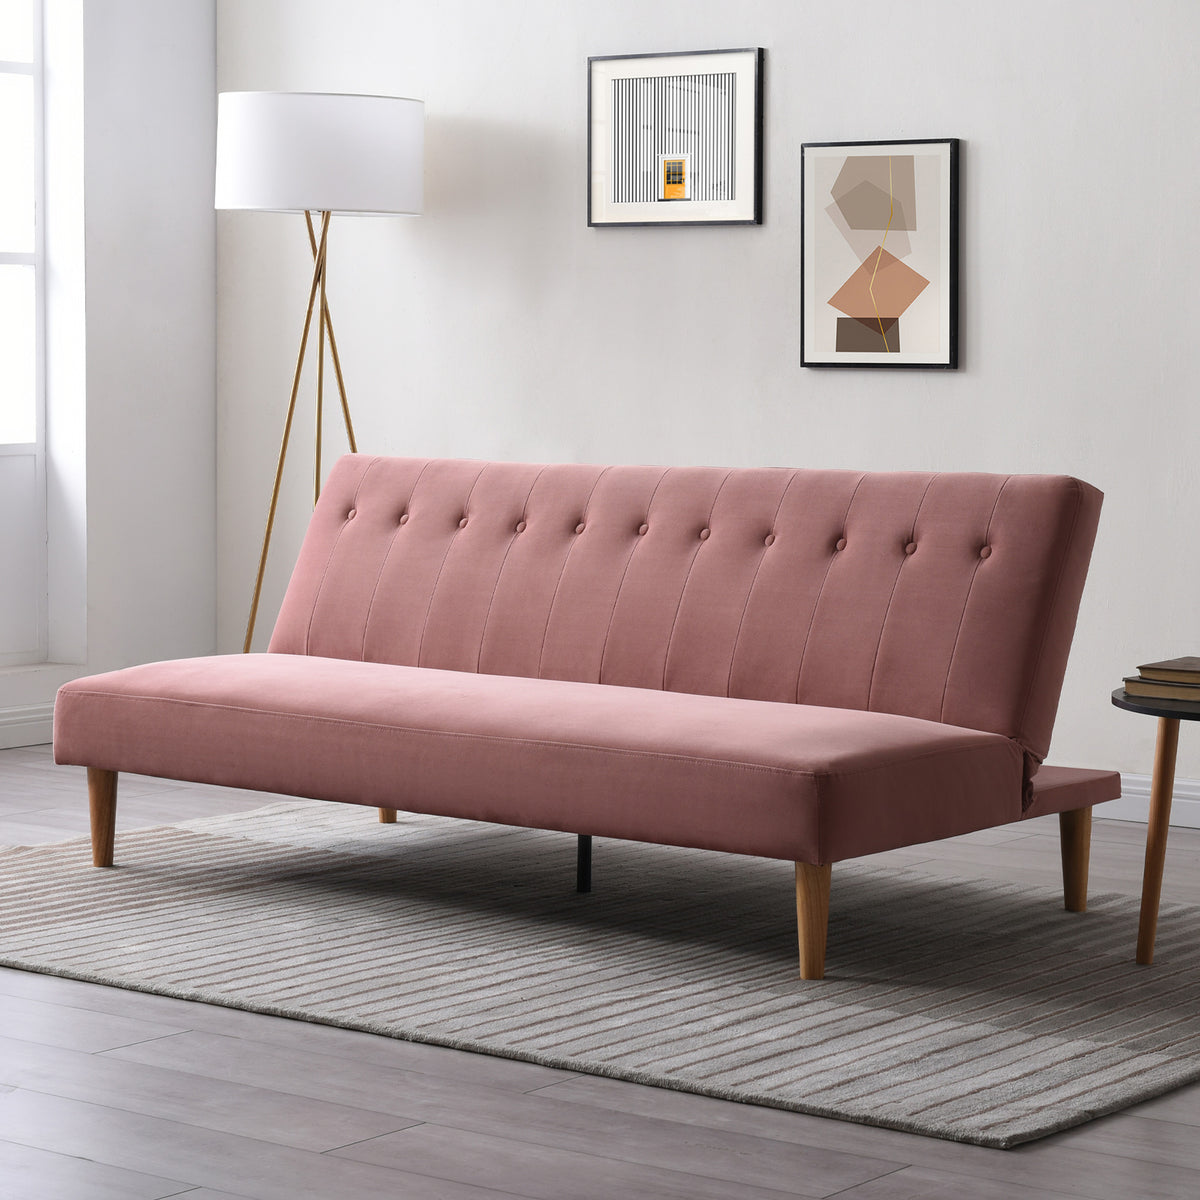 Shelby Dusty Pink Velvet Clik Clak Futon Sofa Bed